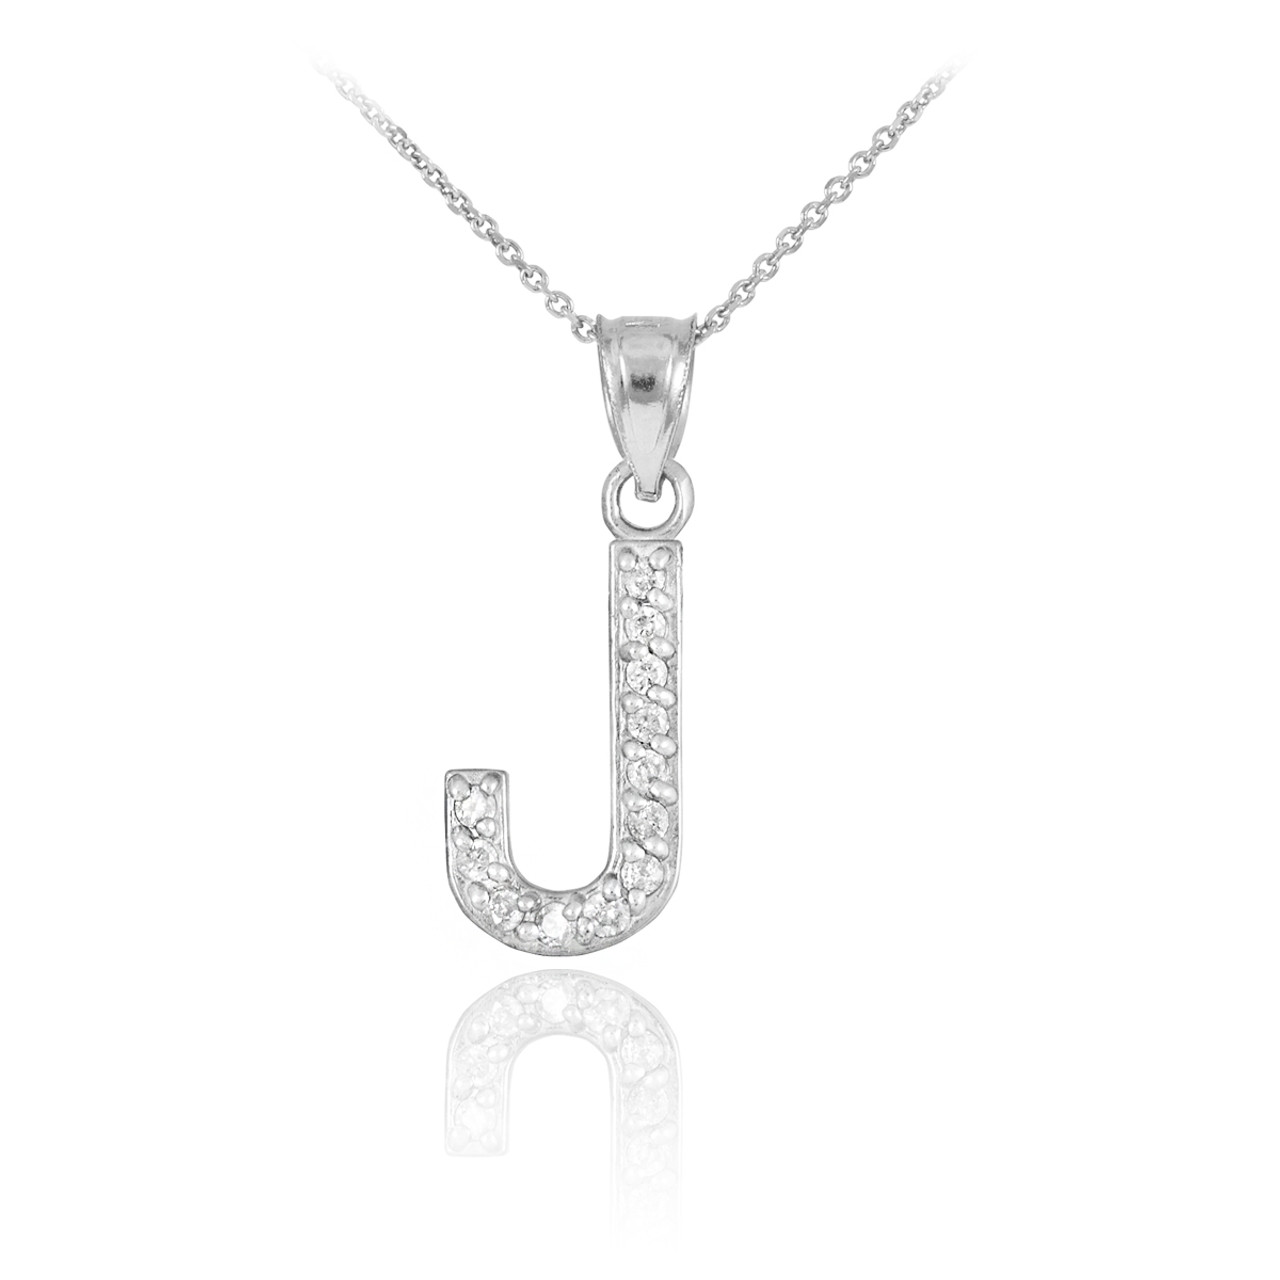 Leave Your Initials - Silver - J Necklace - Paparazzi Accessories –  Bedazzle Me Pretty Mobile Fashion Boutique